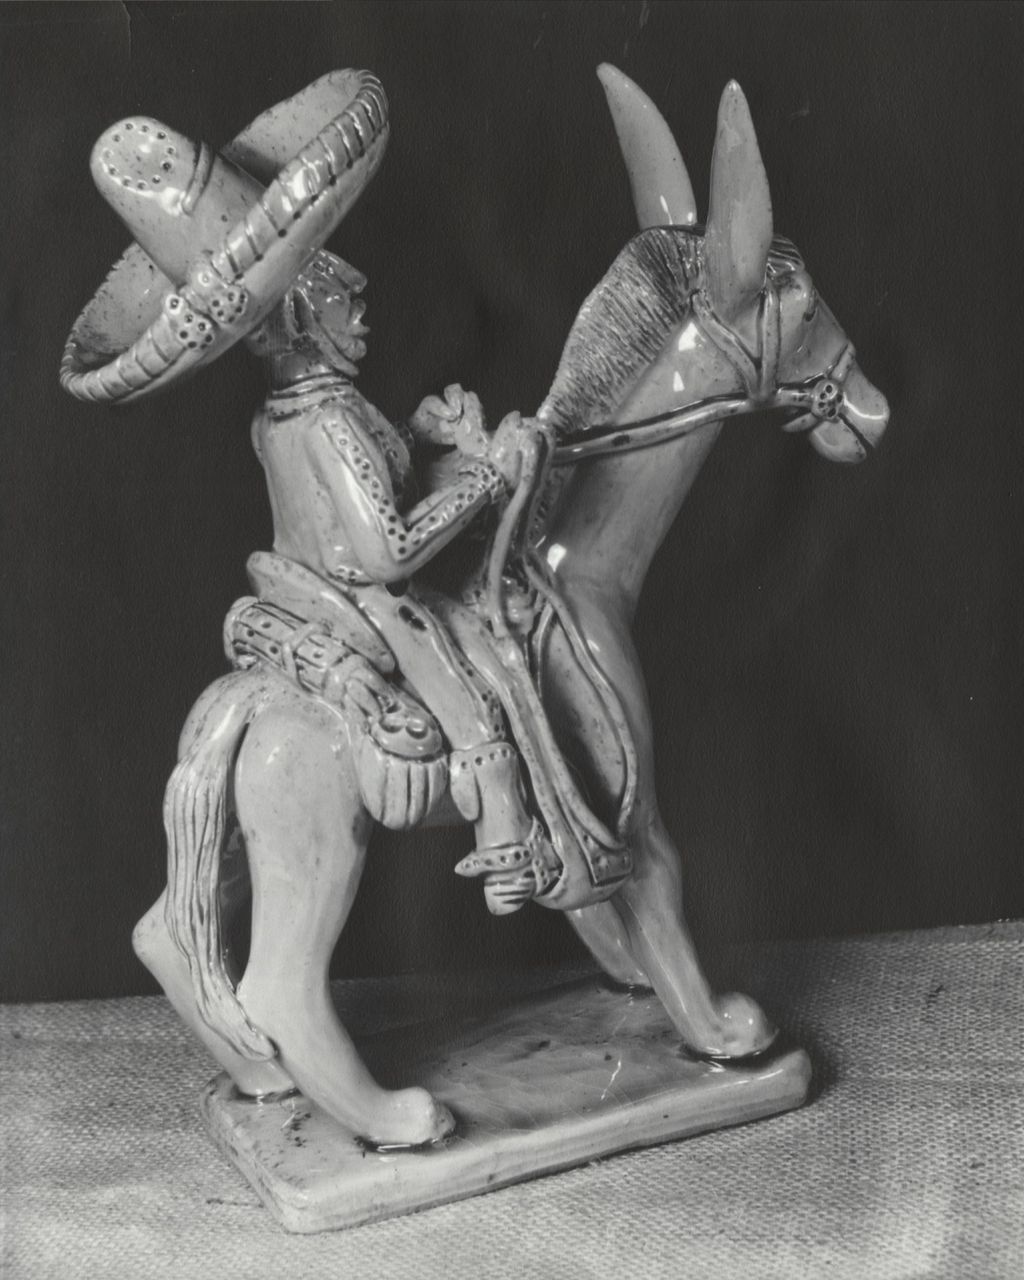 Ceramic sculpture of a Mexican cowboy on horseback